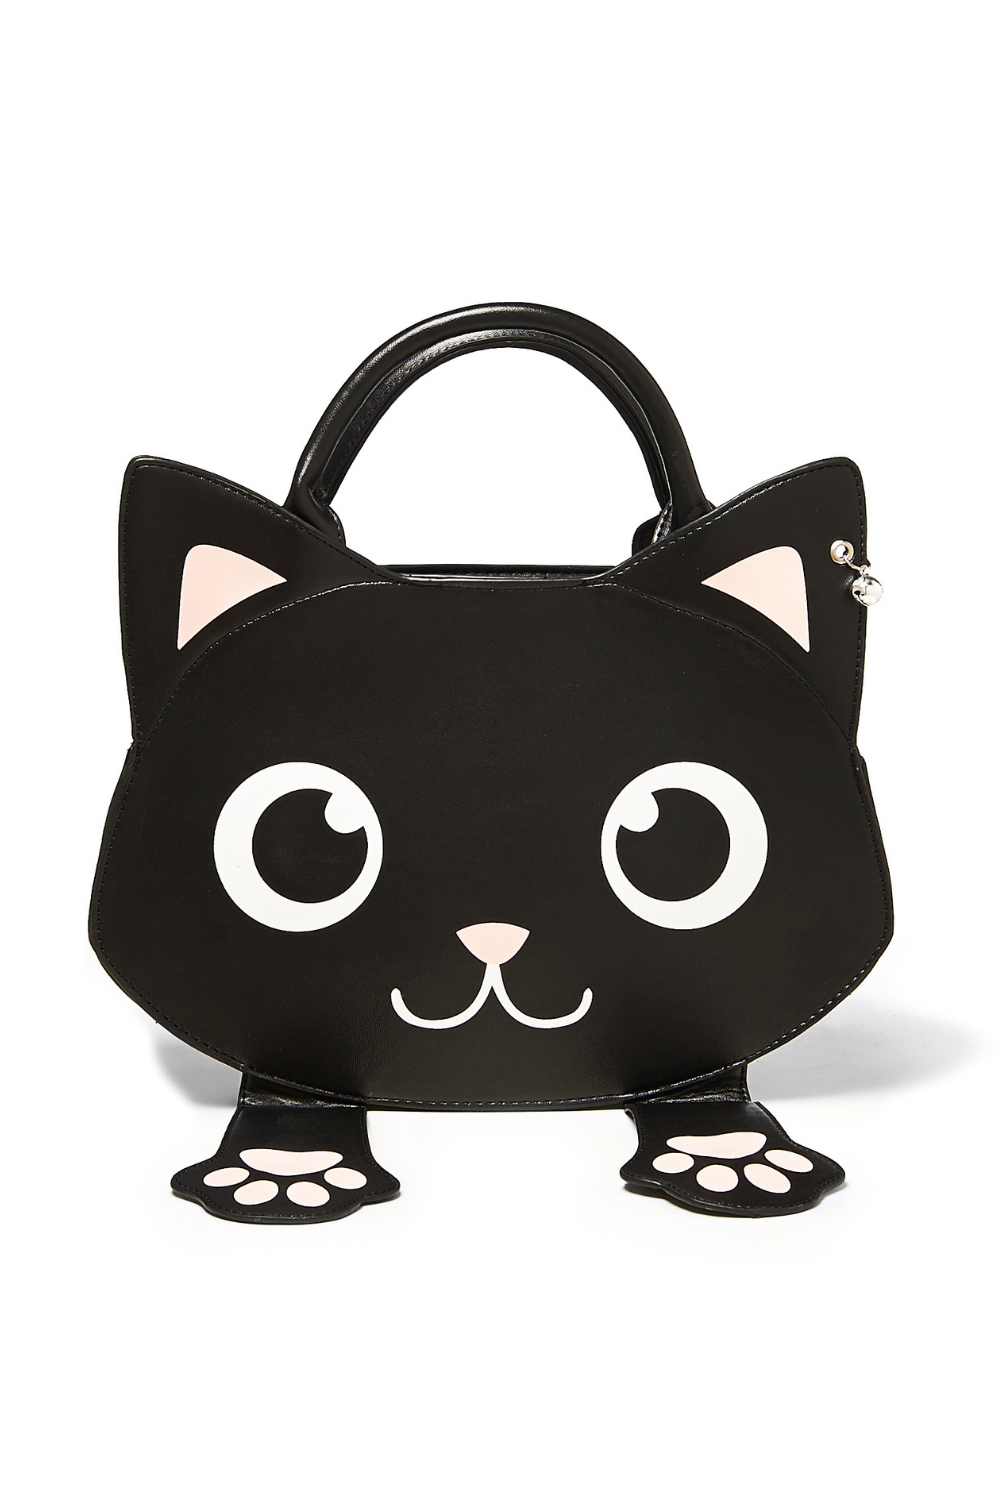 Black cat shaped handbag